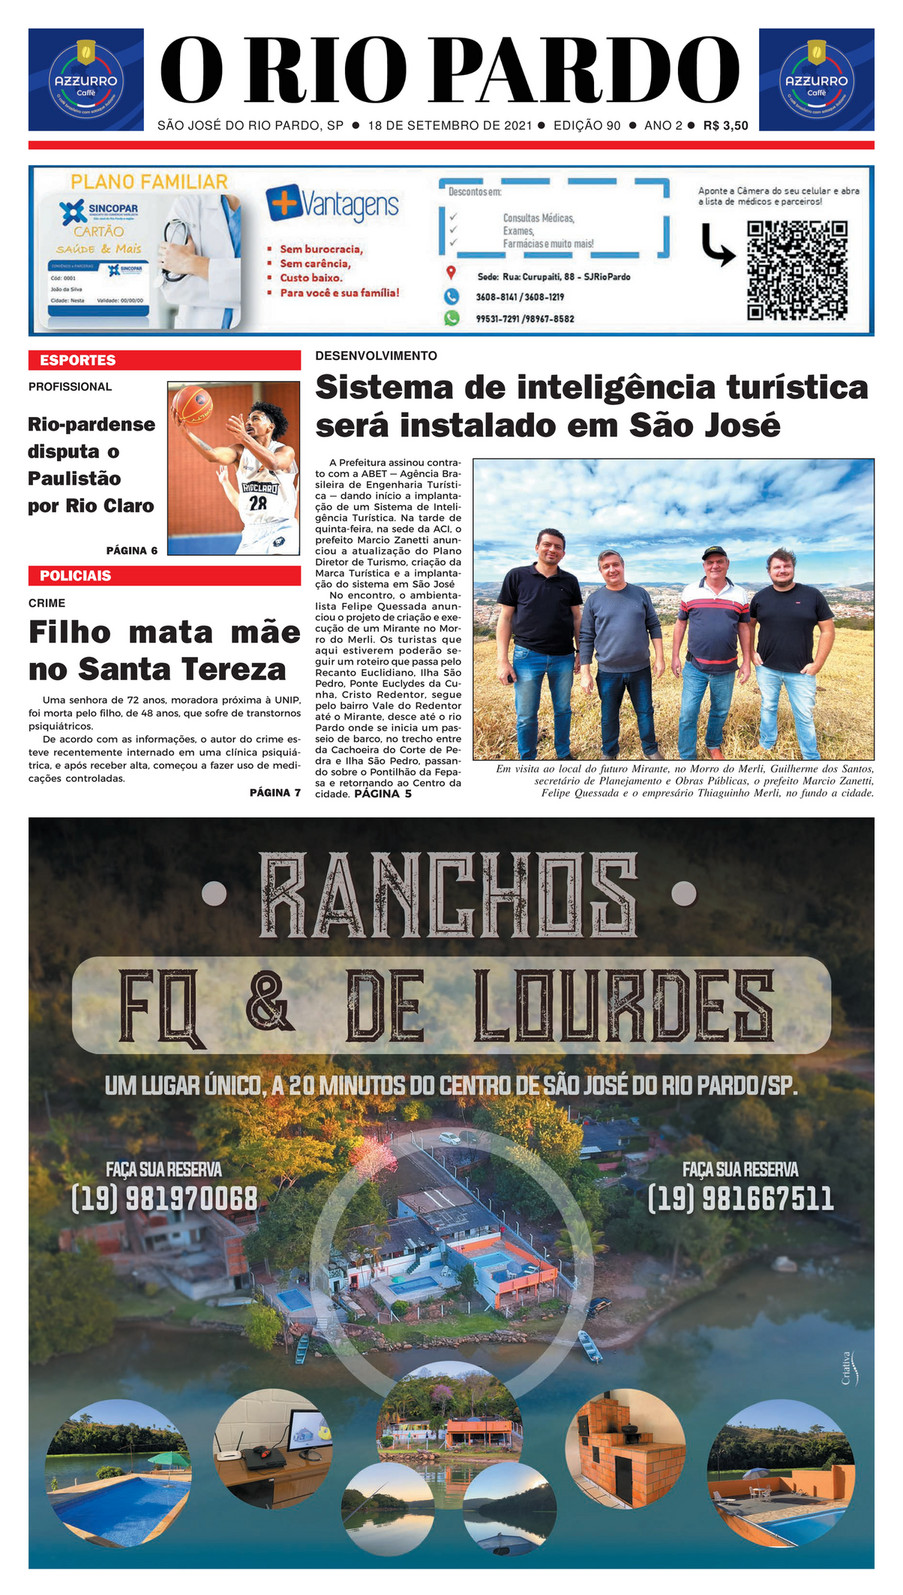 My publications - FIS 1 2016 - Página 1 - Created with Publitas.com